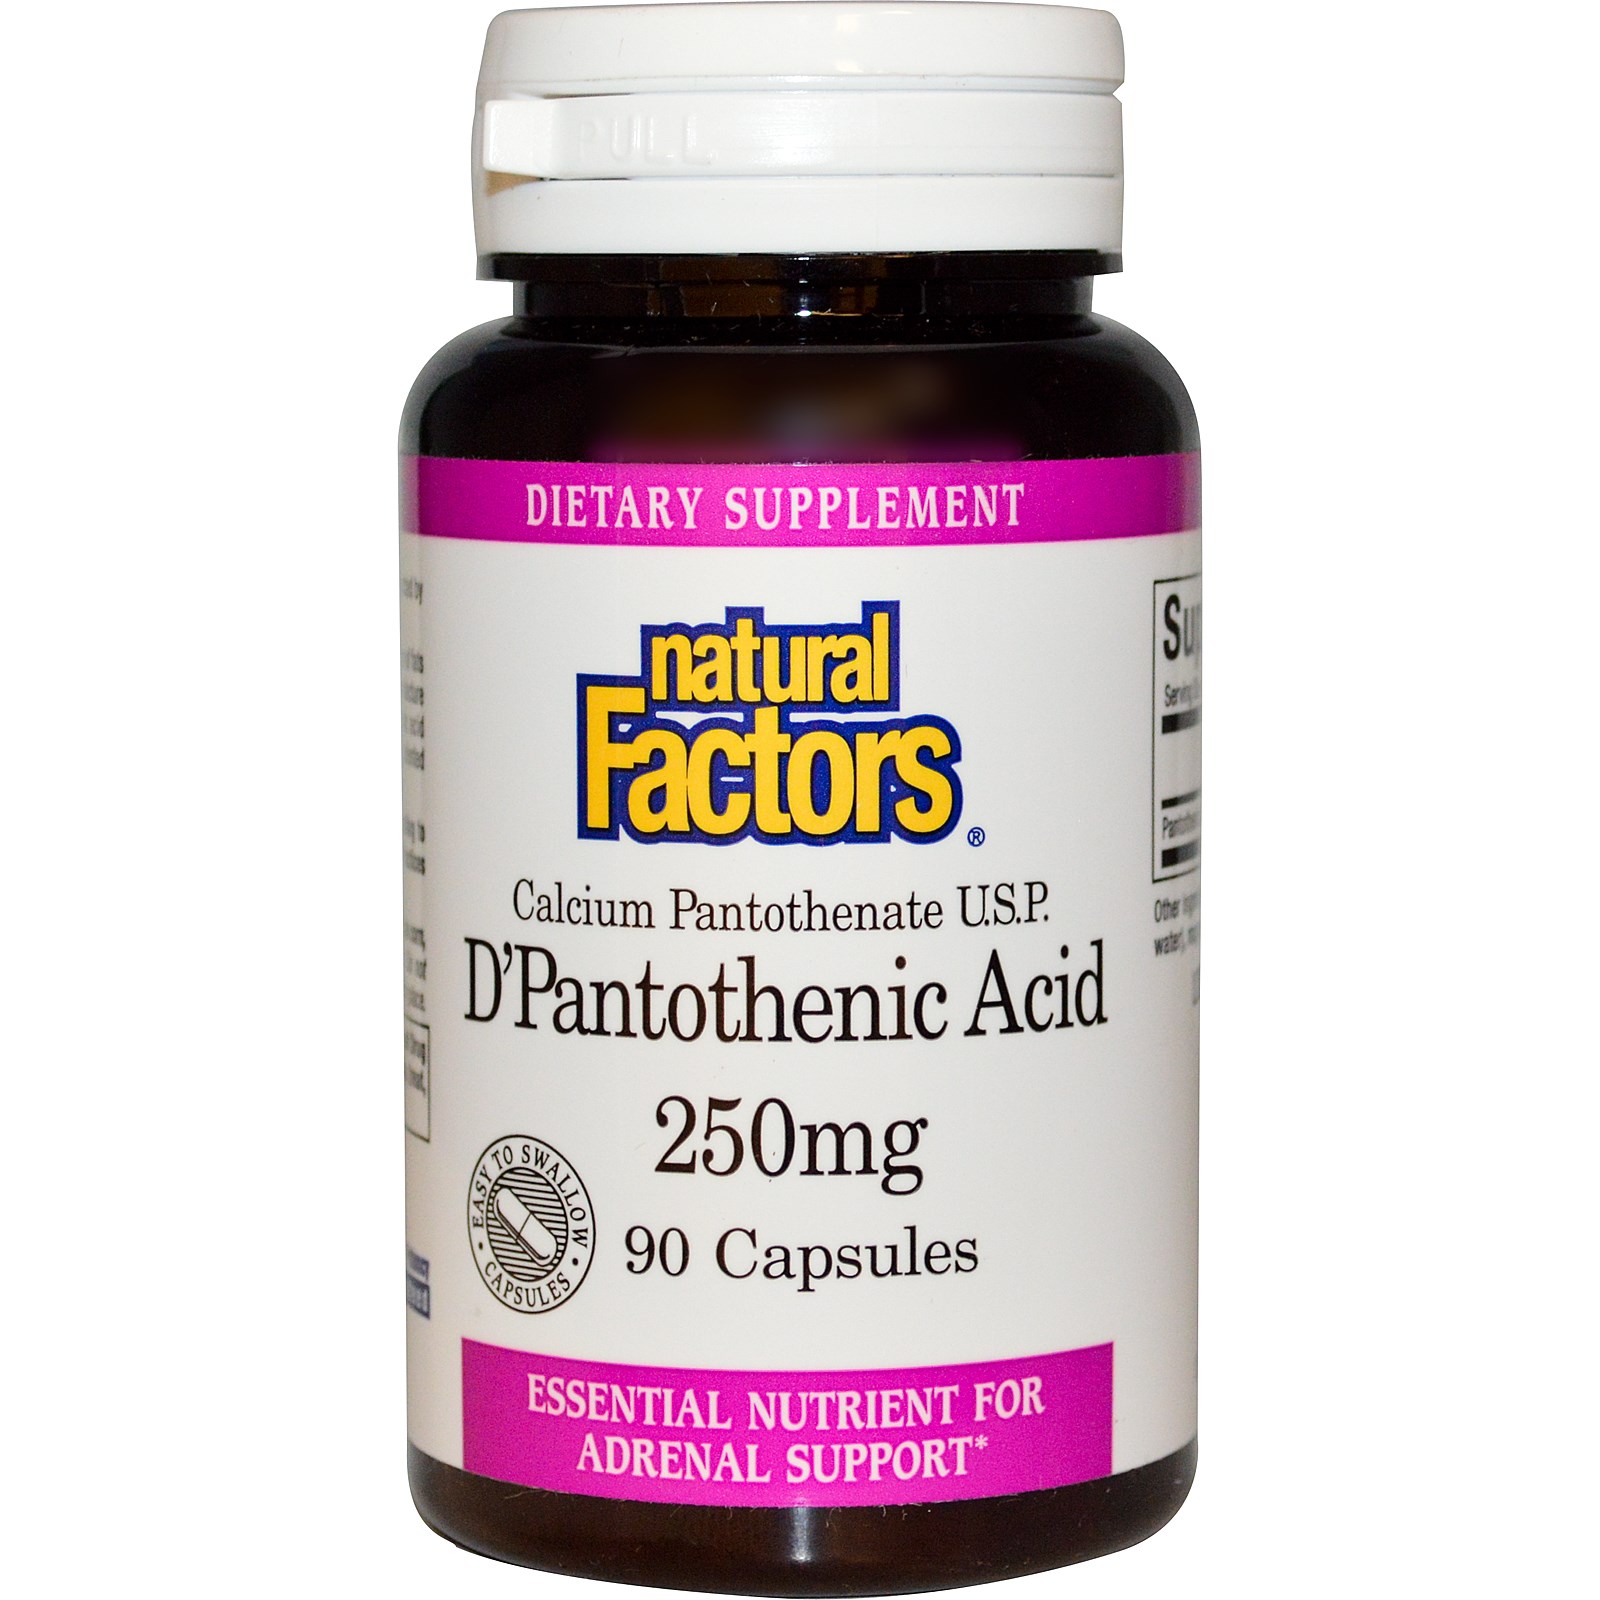 Natural factors, D’pantothenic acid